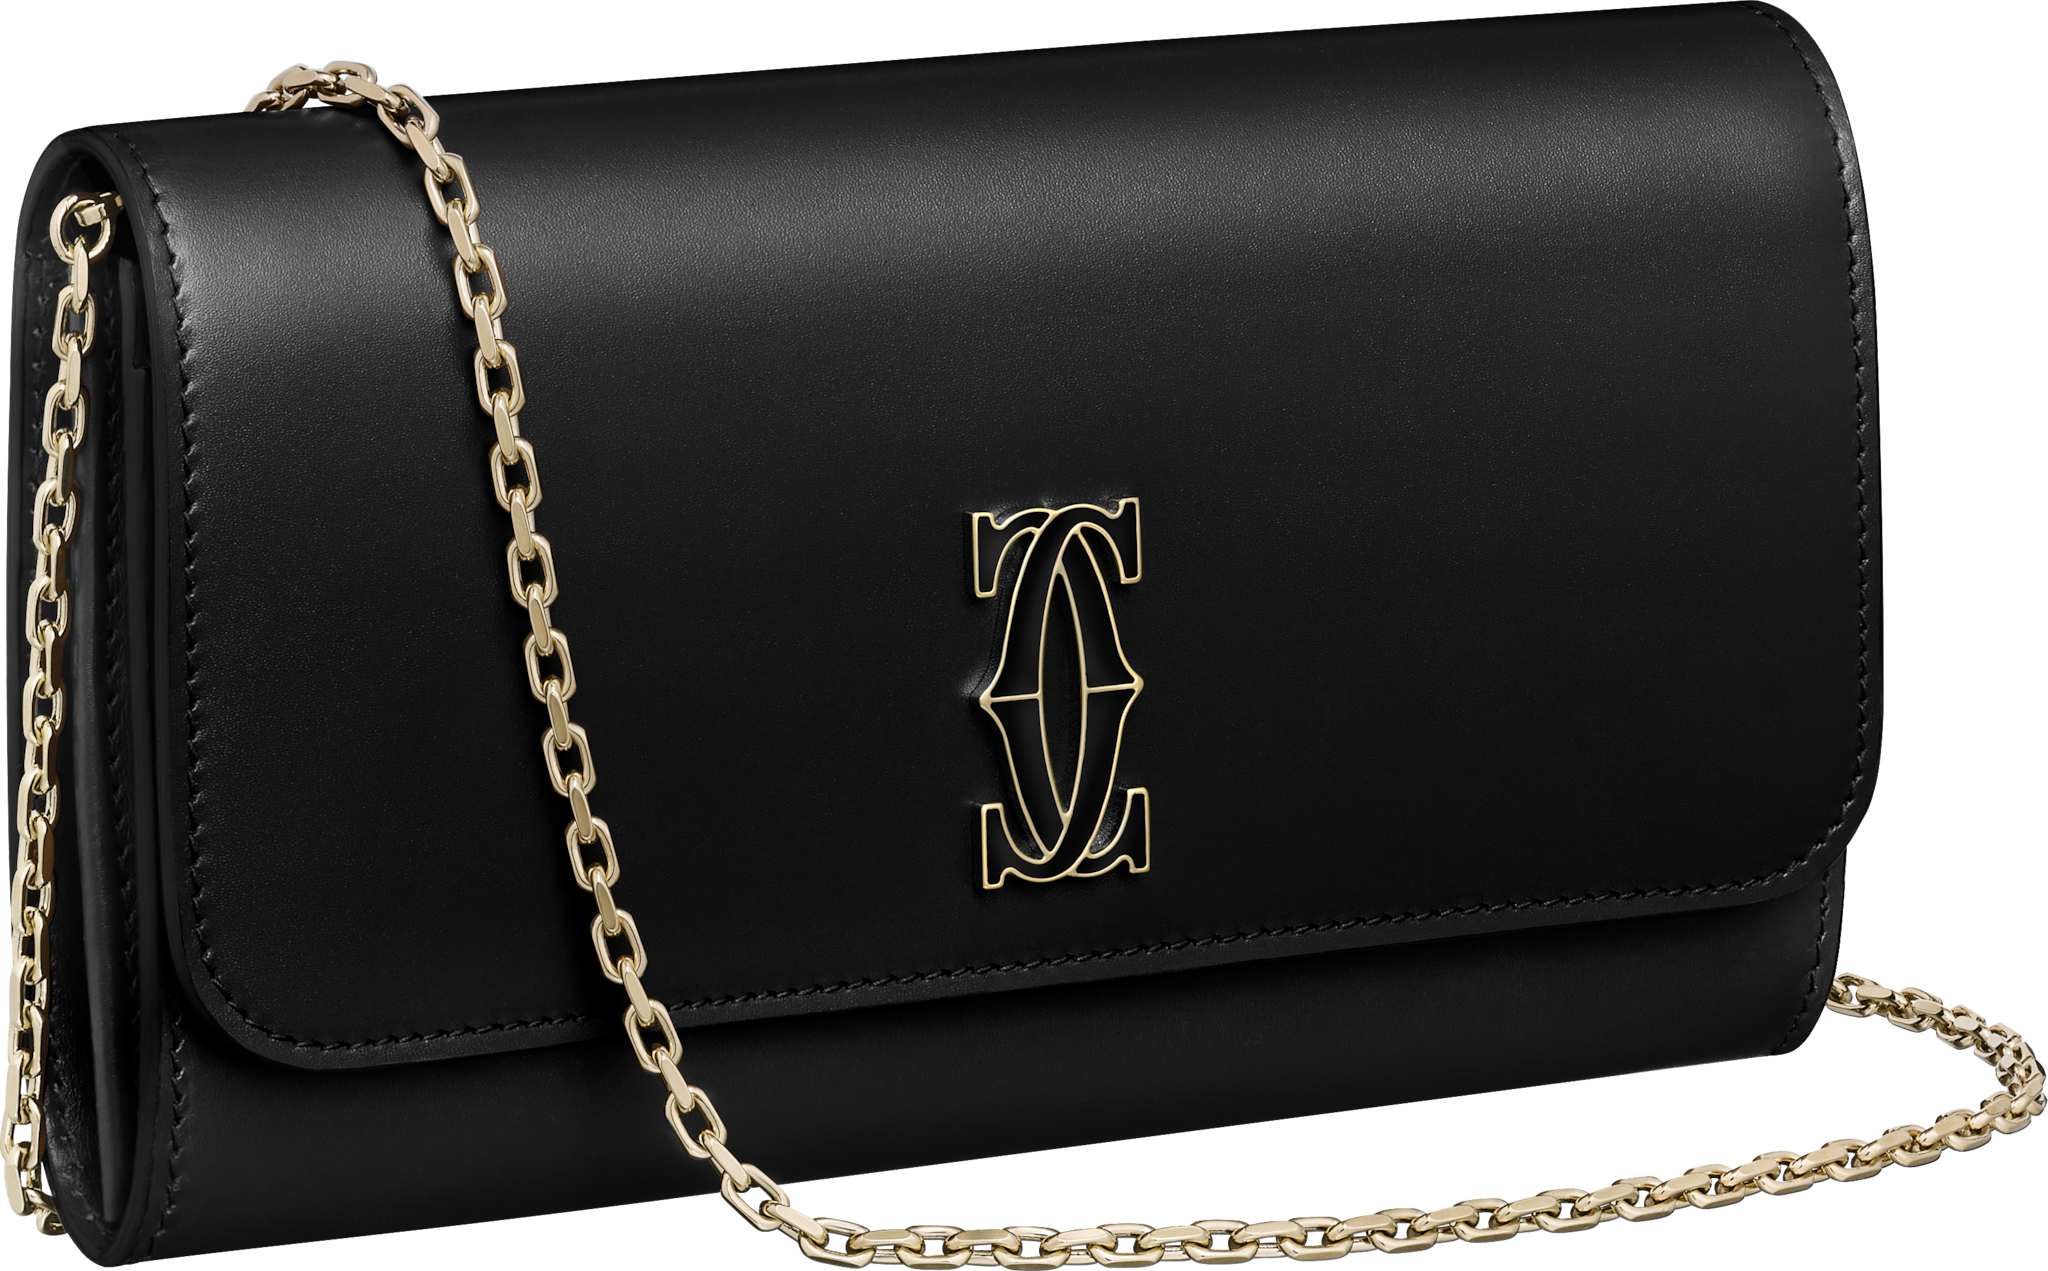 Chain wallet, C de CartierBlack calfskin, golden finish and black enamel